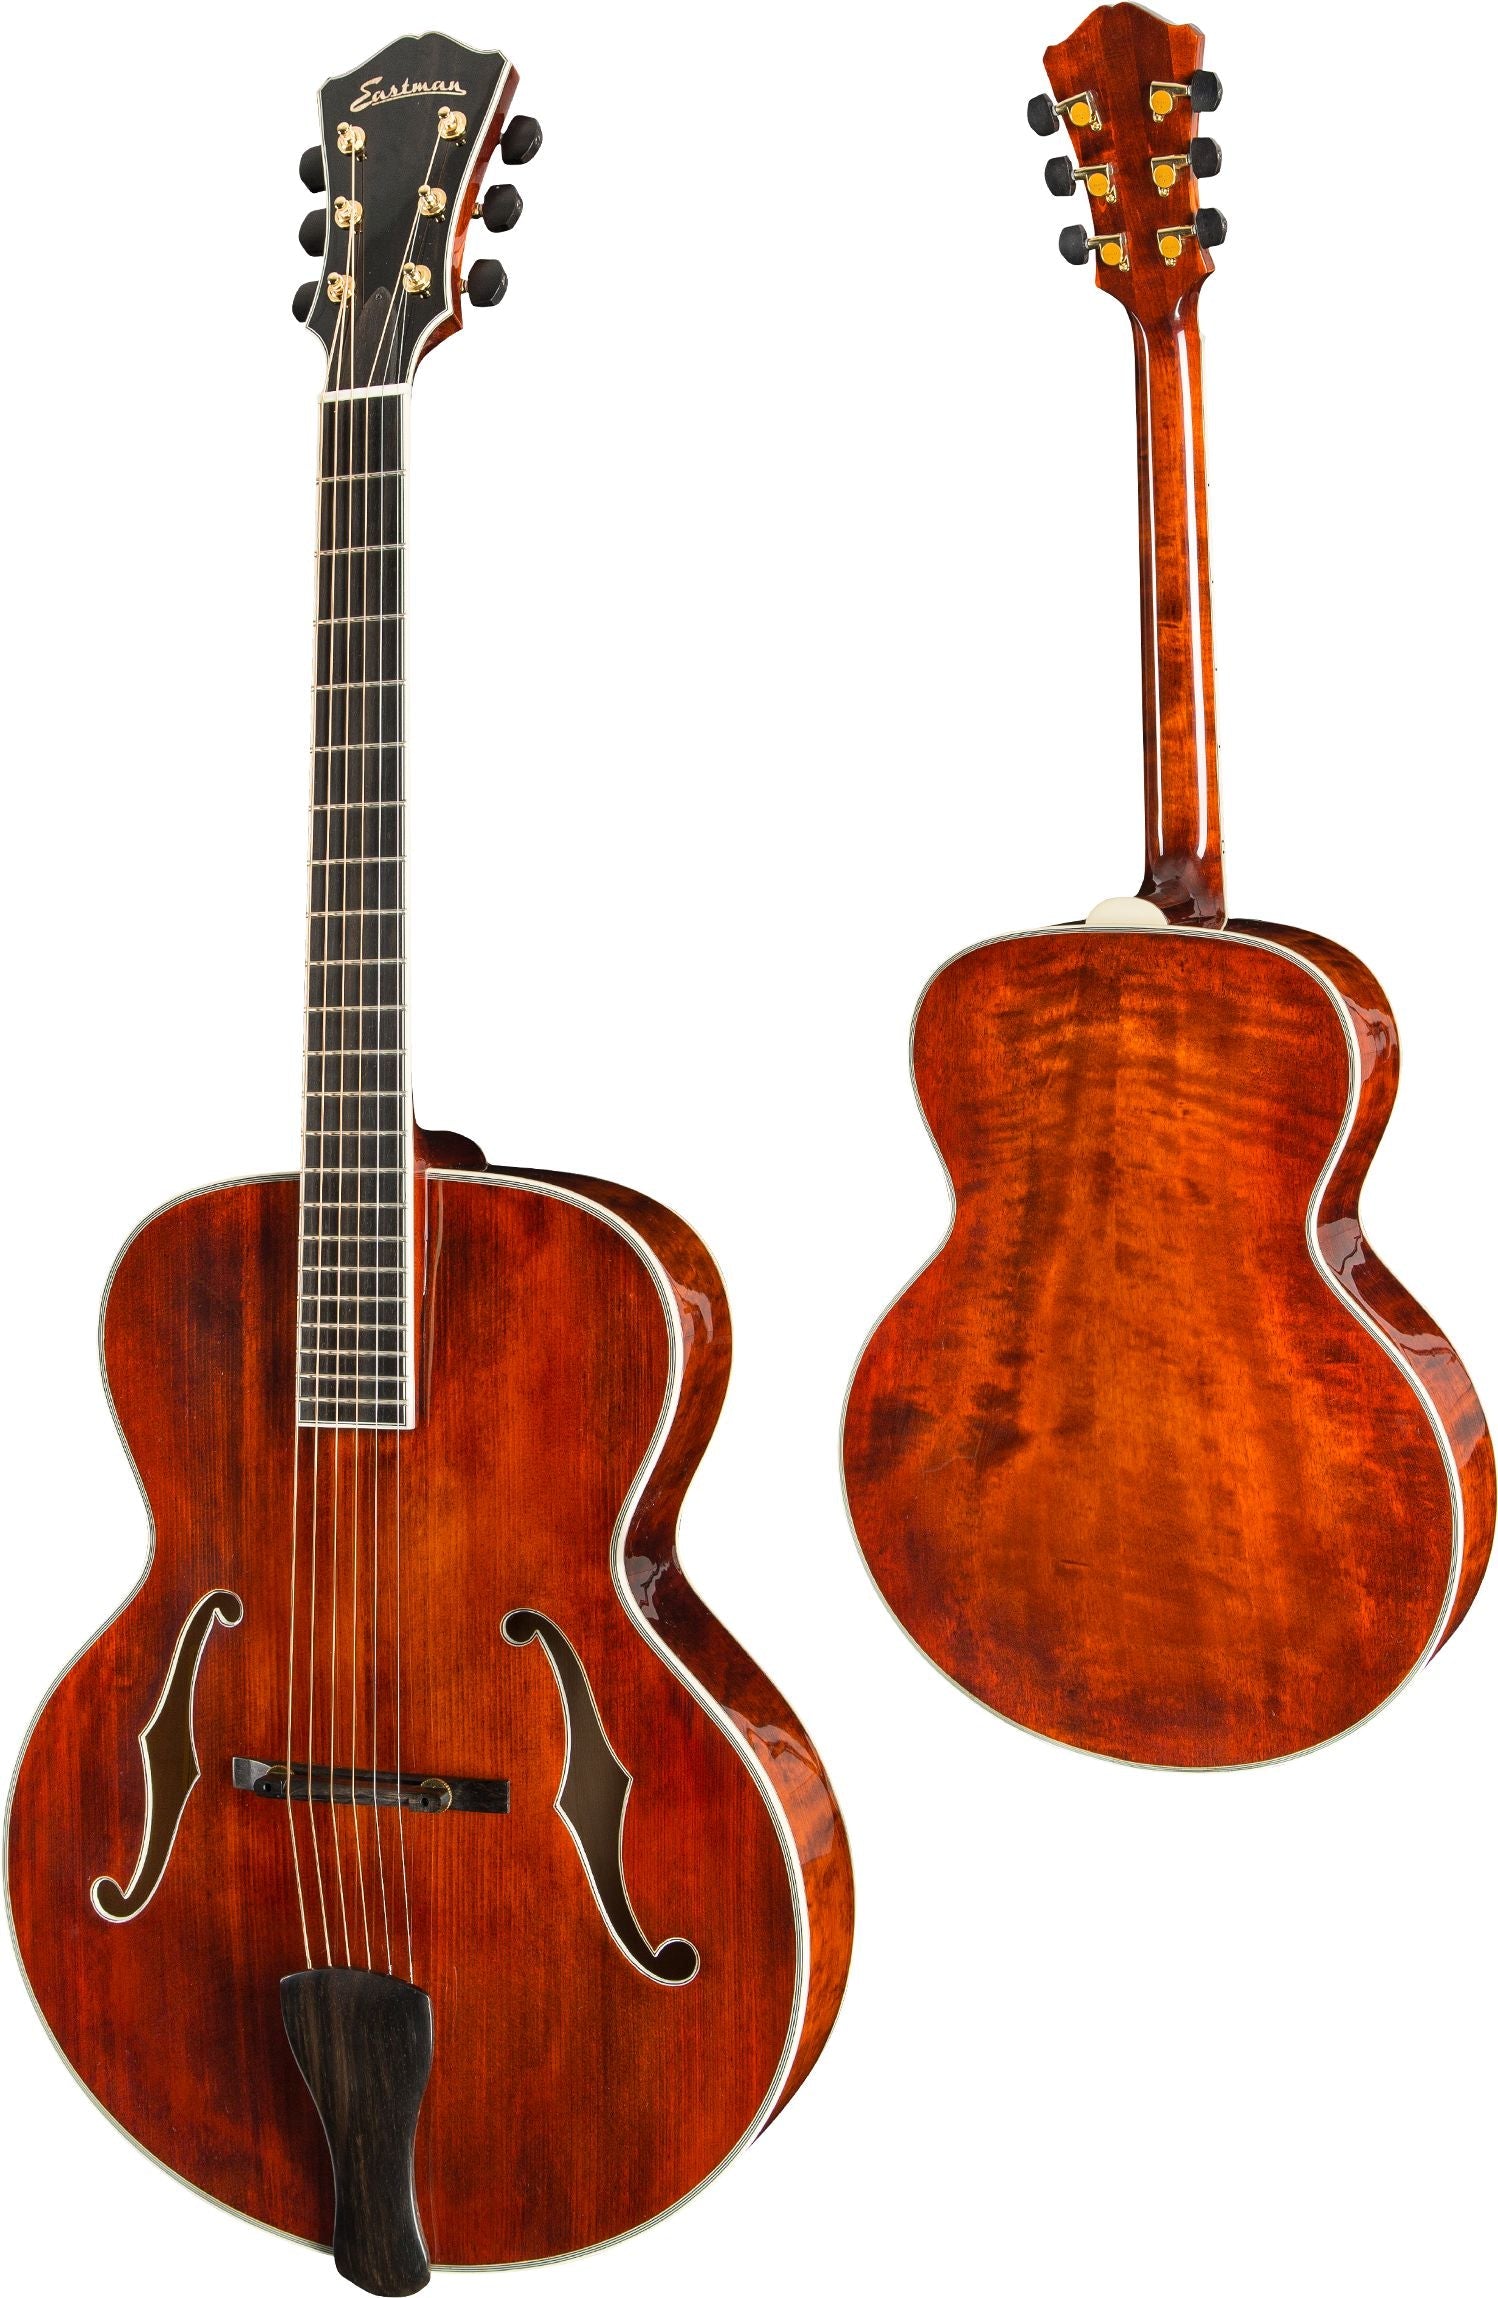 Eastman AR805, Acoustic Guitar for sale at Richards Guitars.